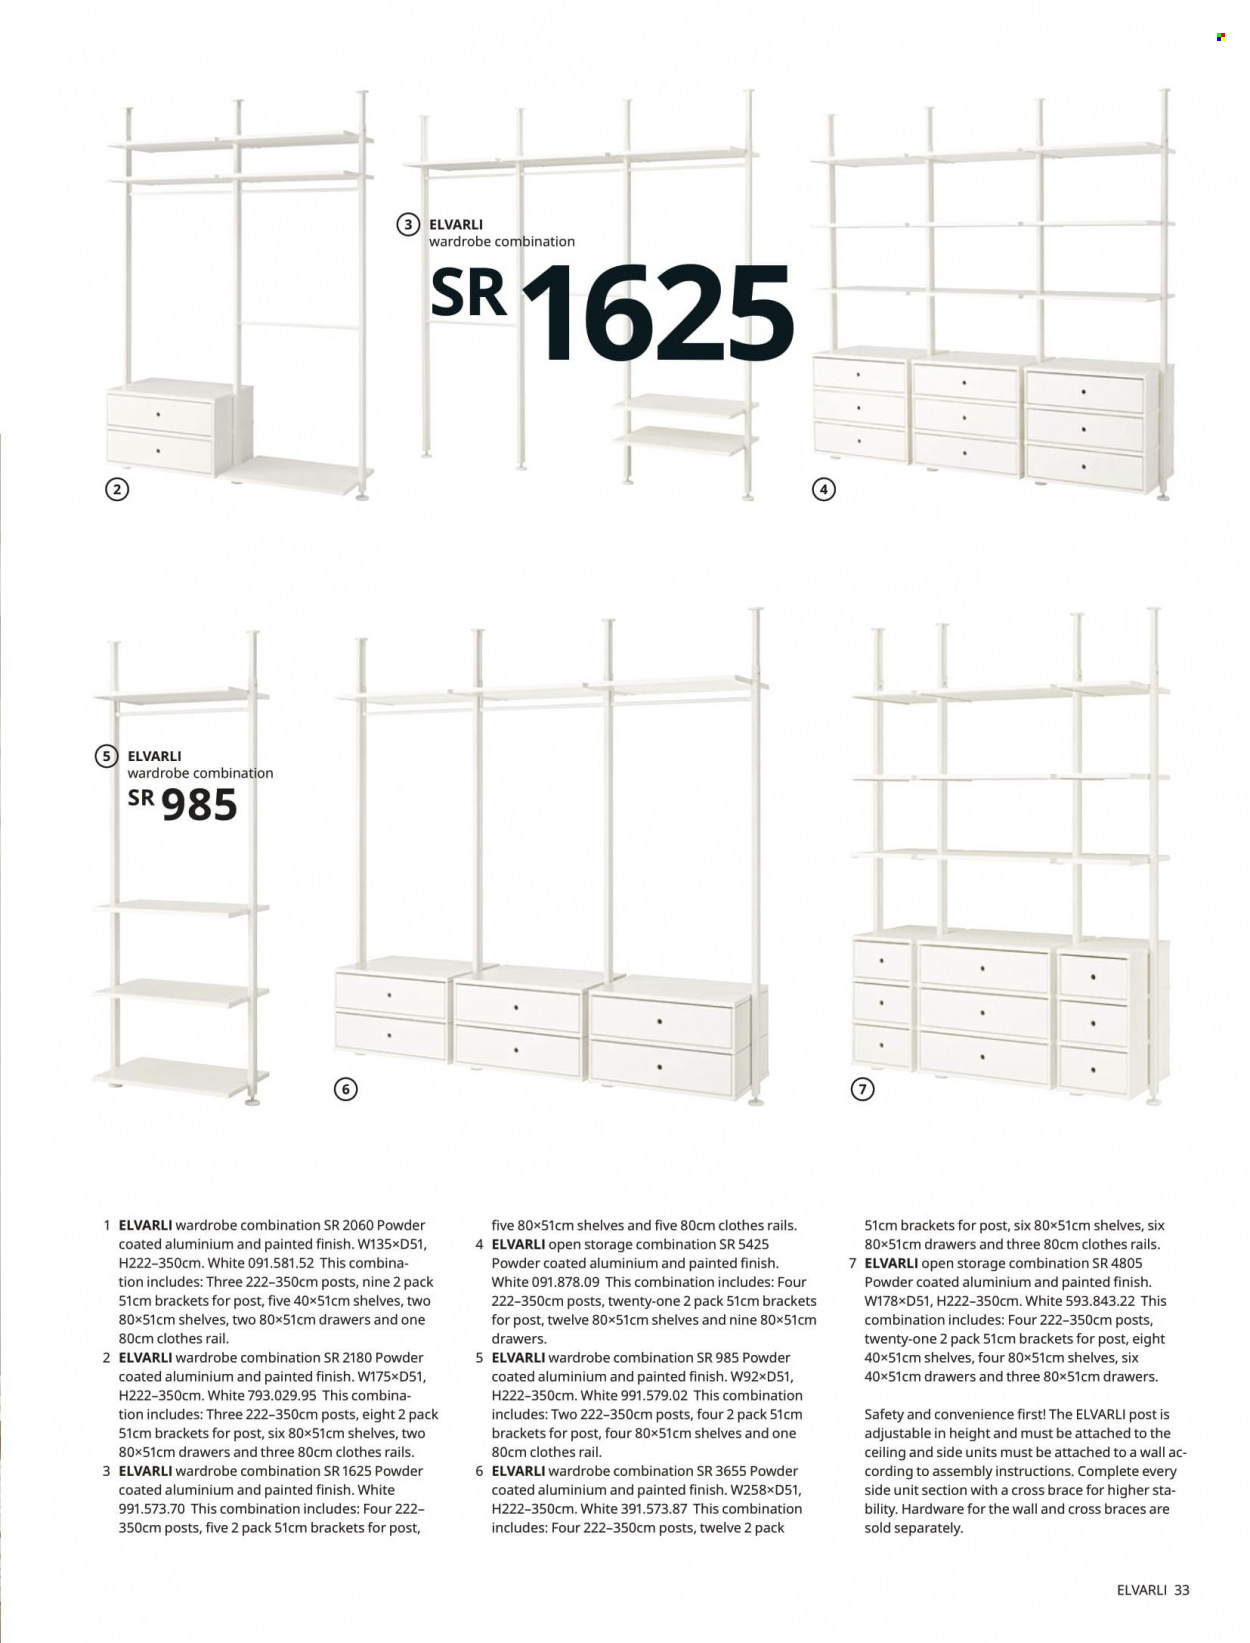 IKEA flyer . Page 33.